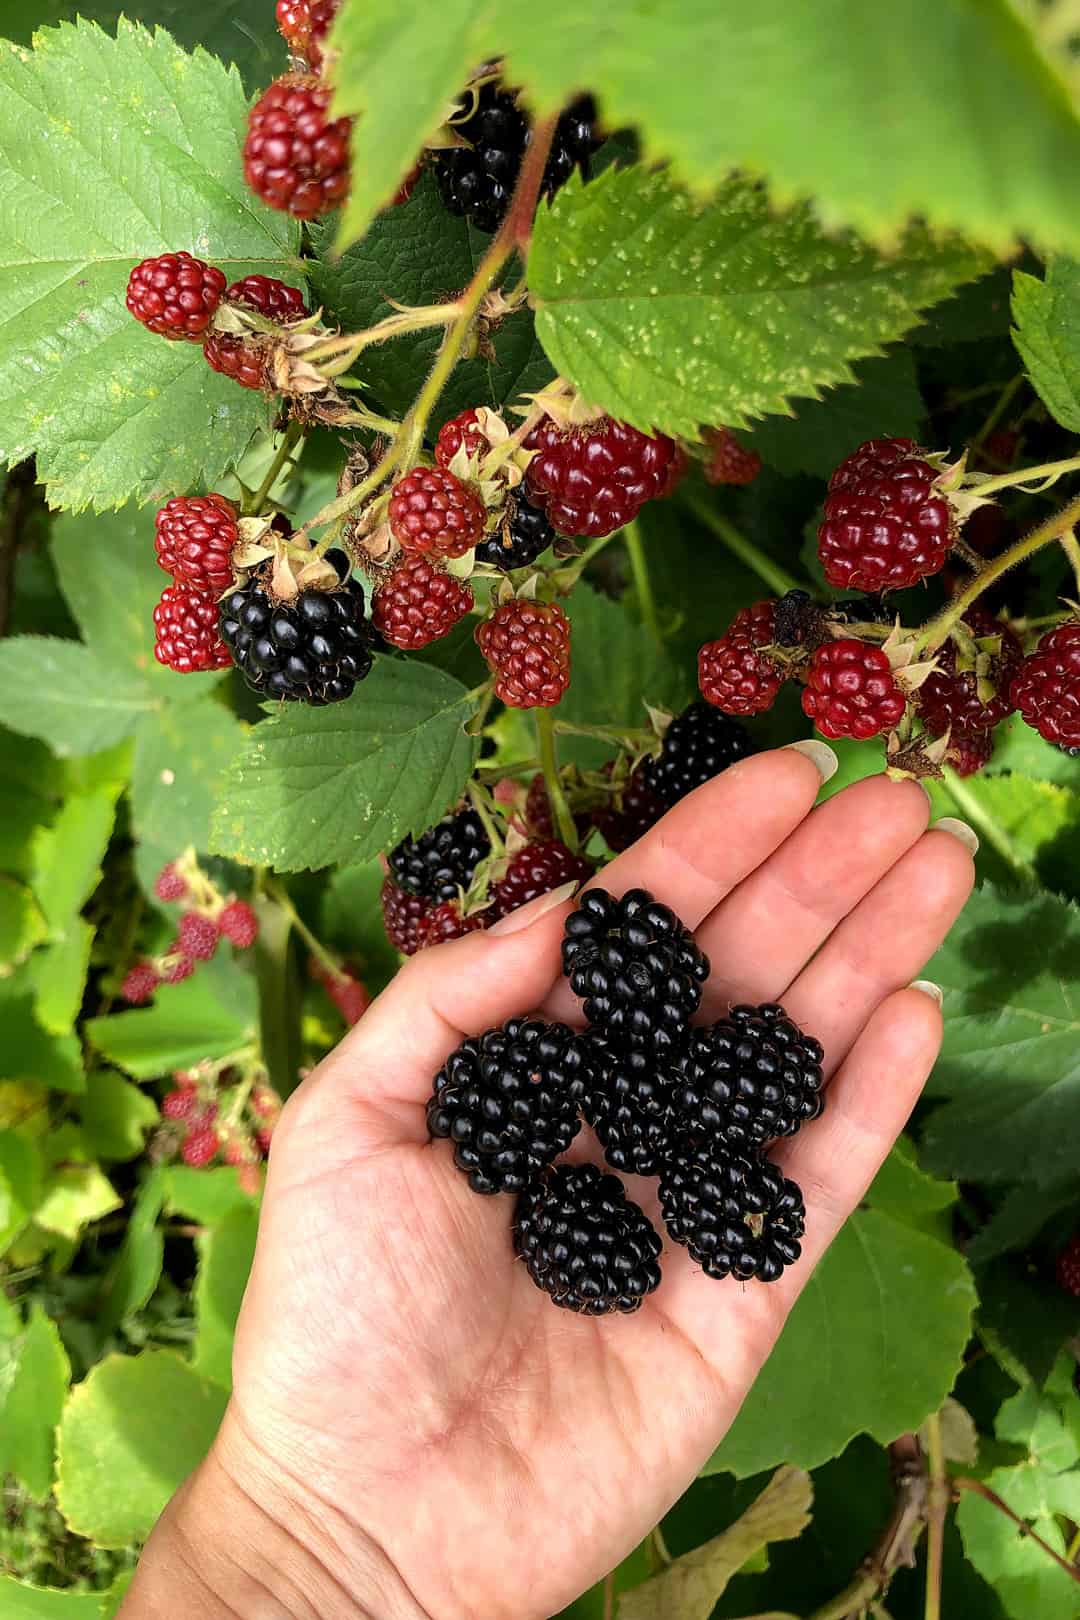 A hand holding freshly picked blackberries